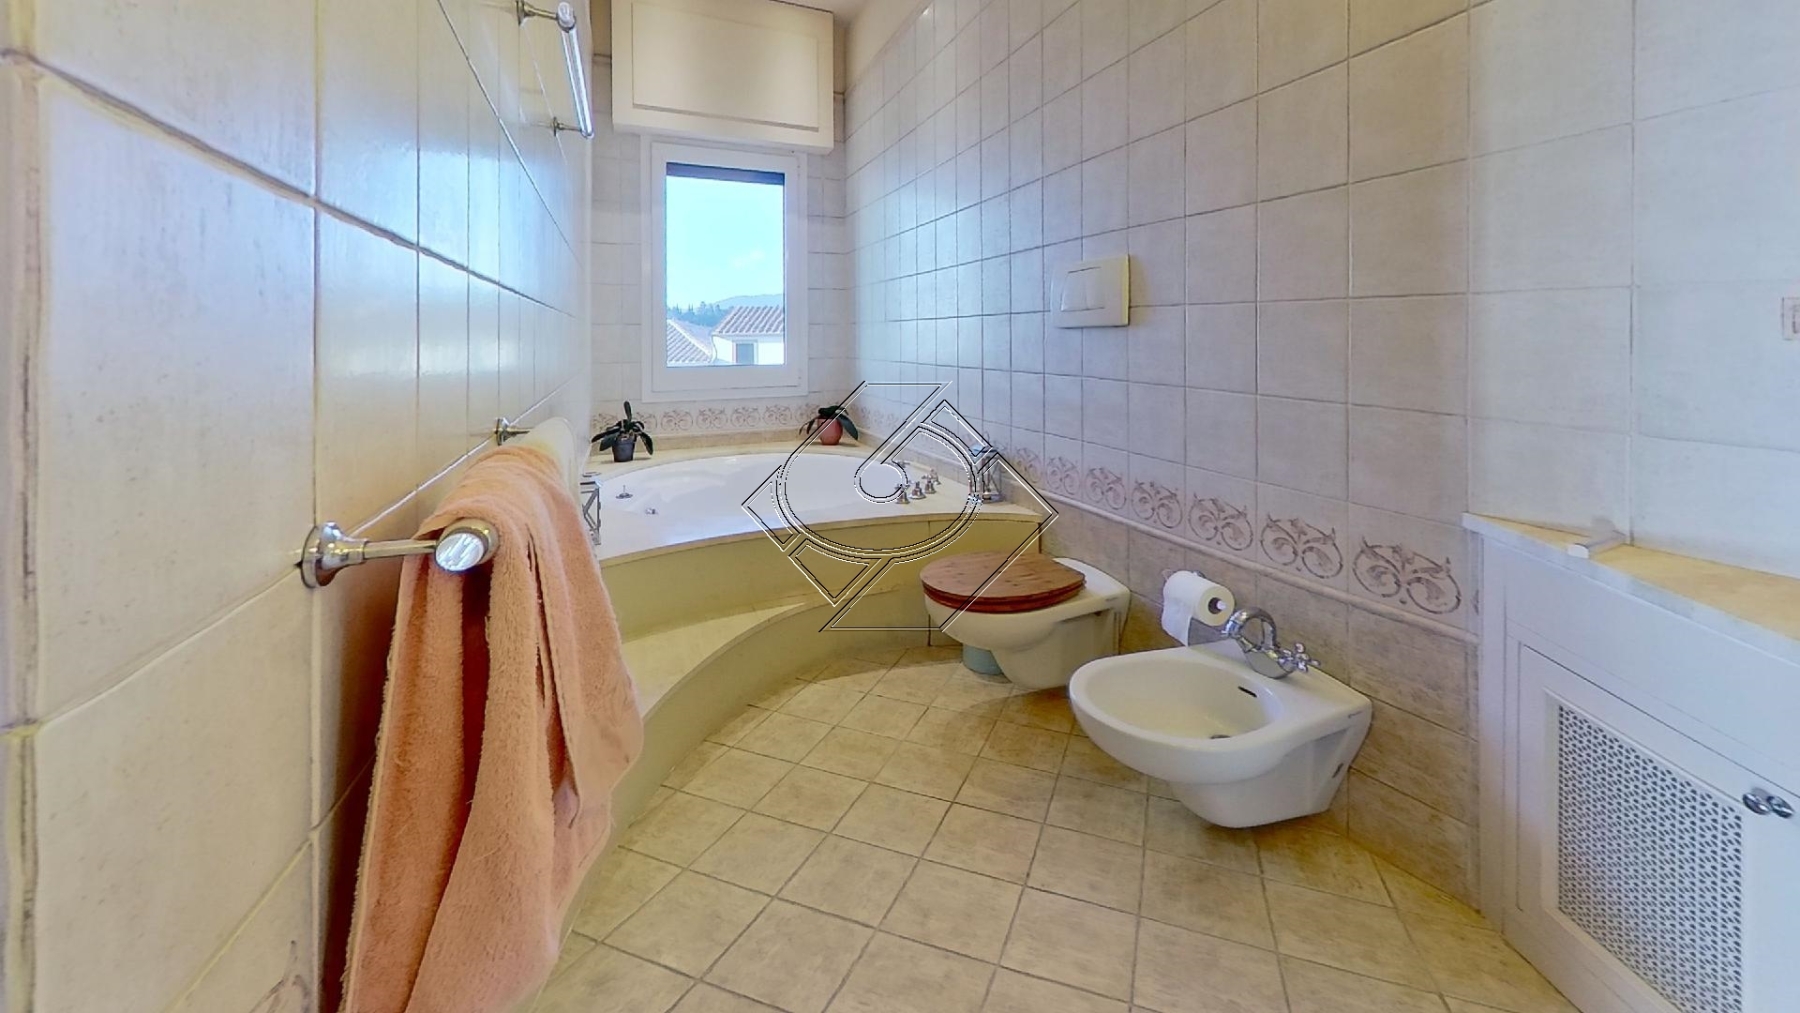 Via-Verdi-Fiesole-Bathroom